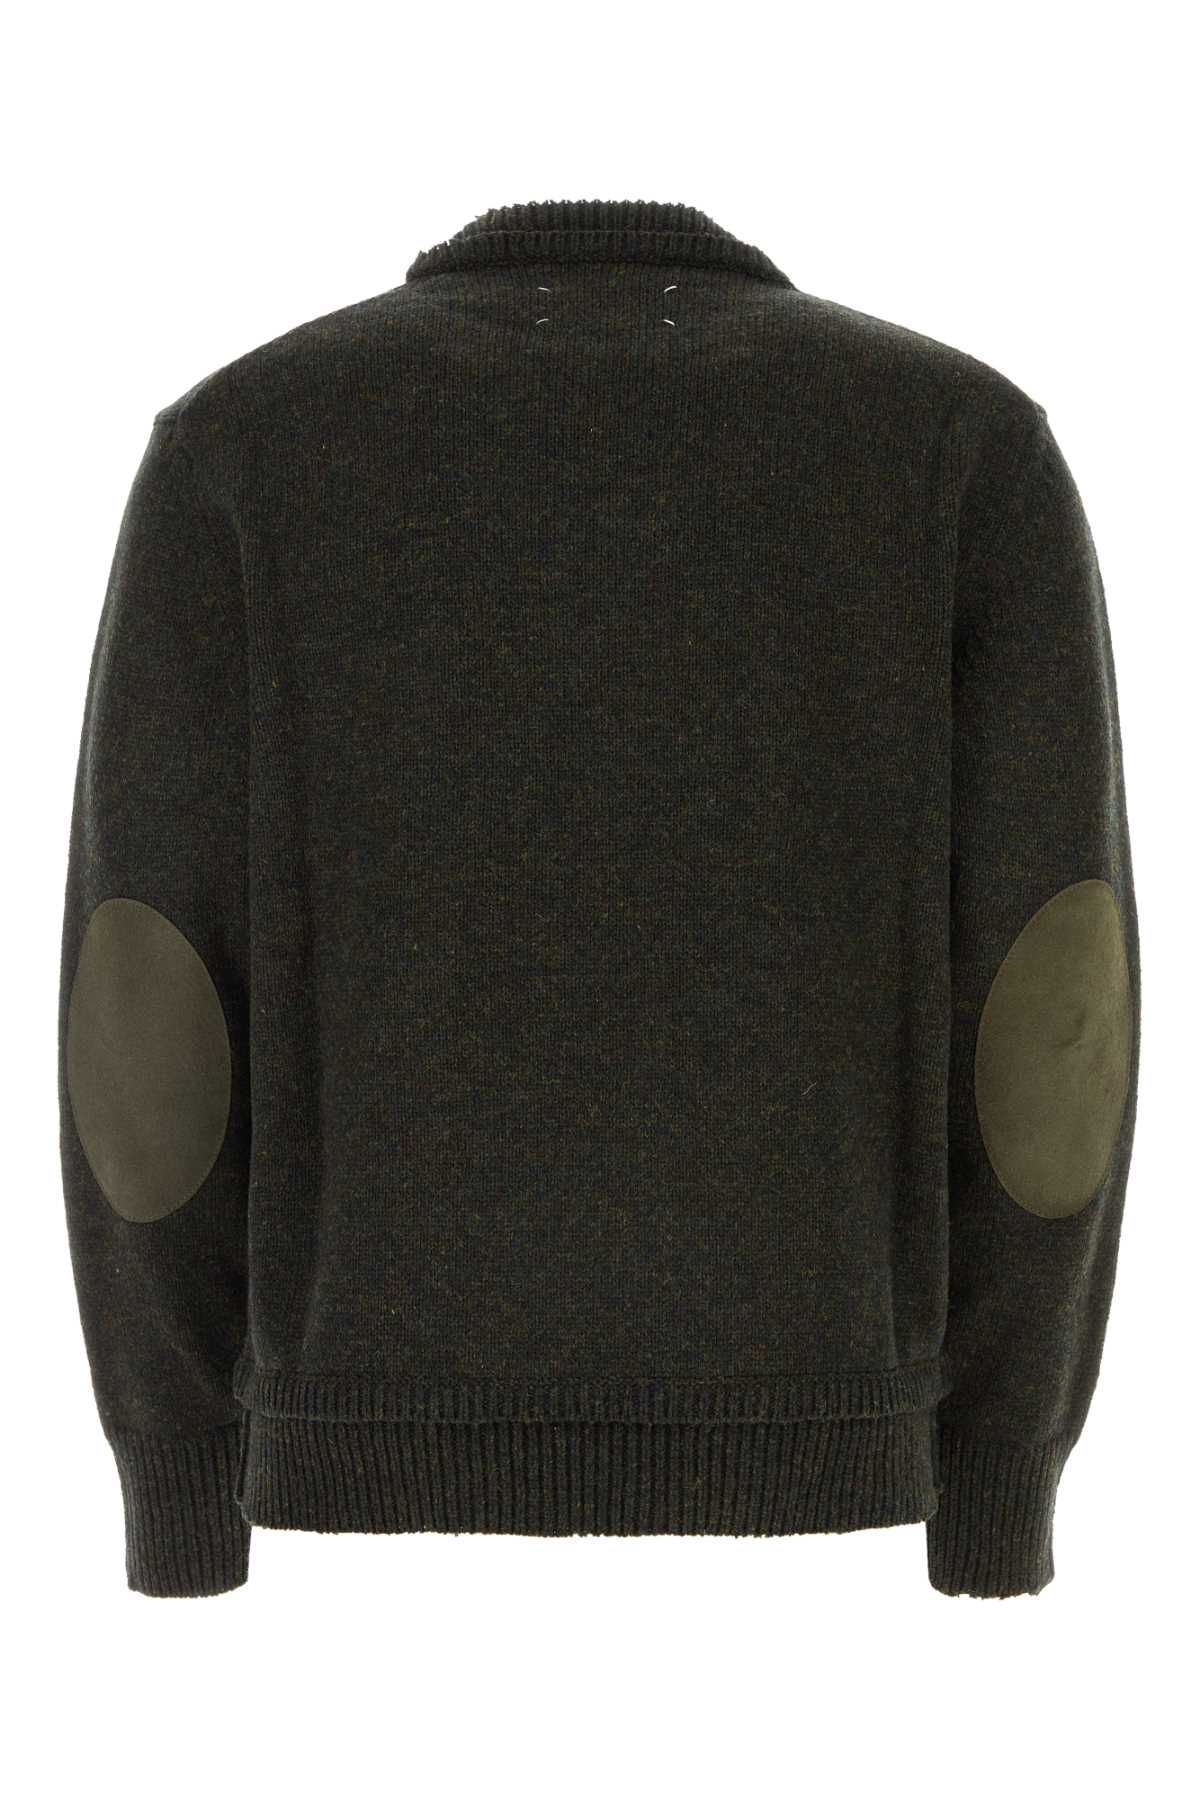 Maison Margiela Charcoal Wool Blend Sweater In Darkgreen